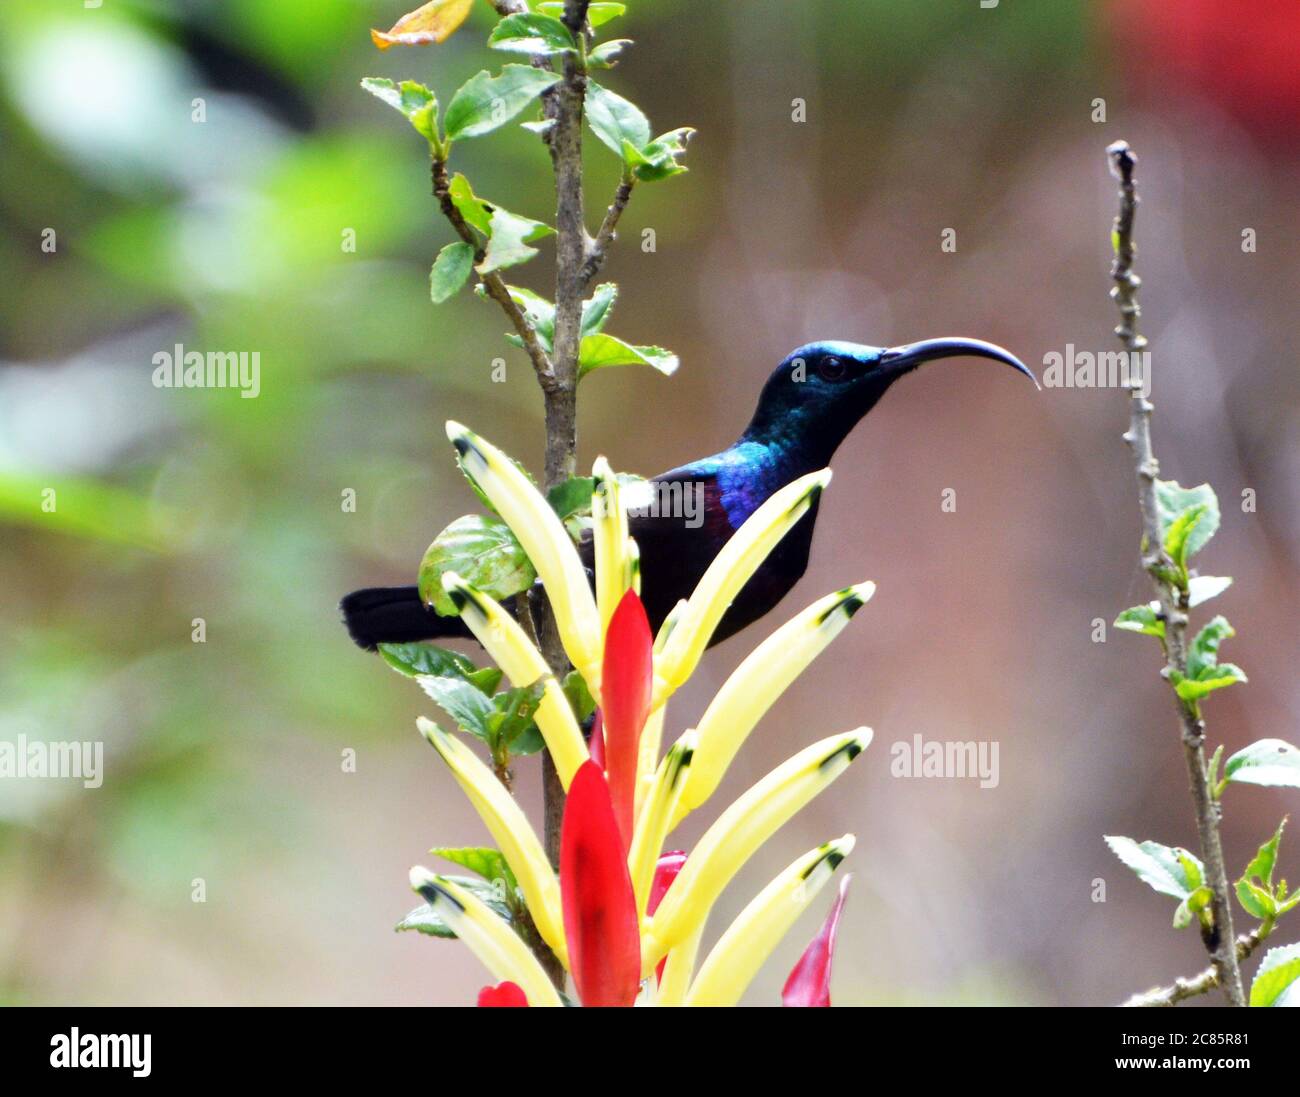 Male Loten's sunbird or Long-billed sunbird Stock Photo